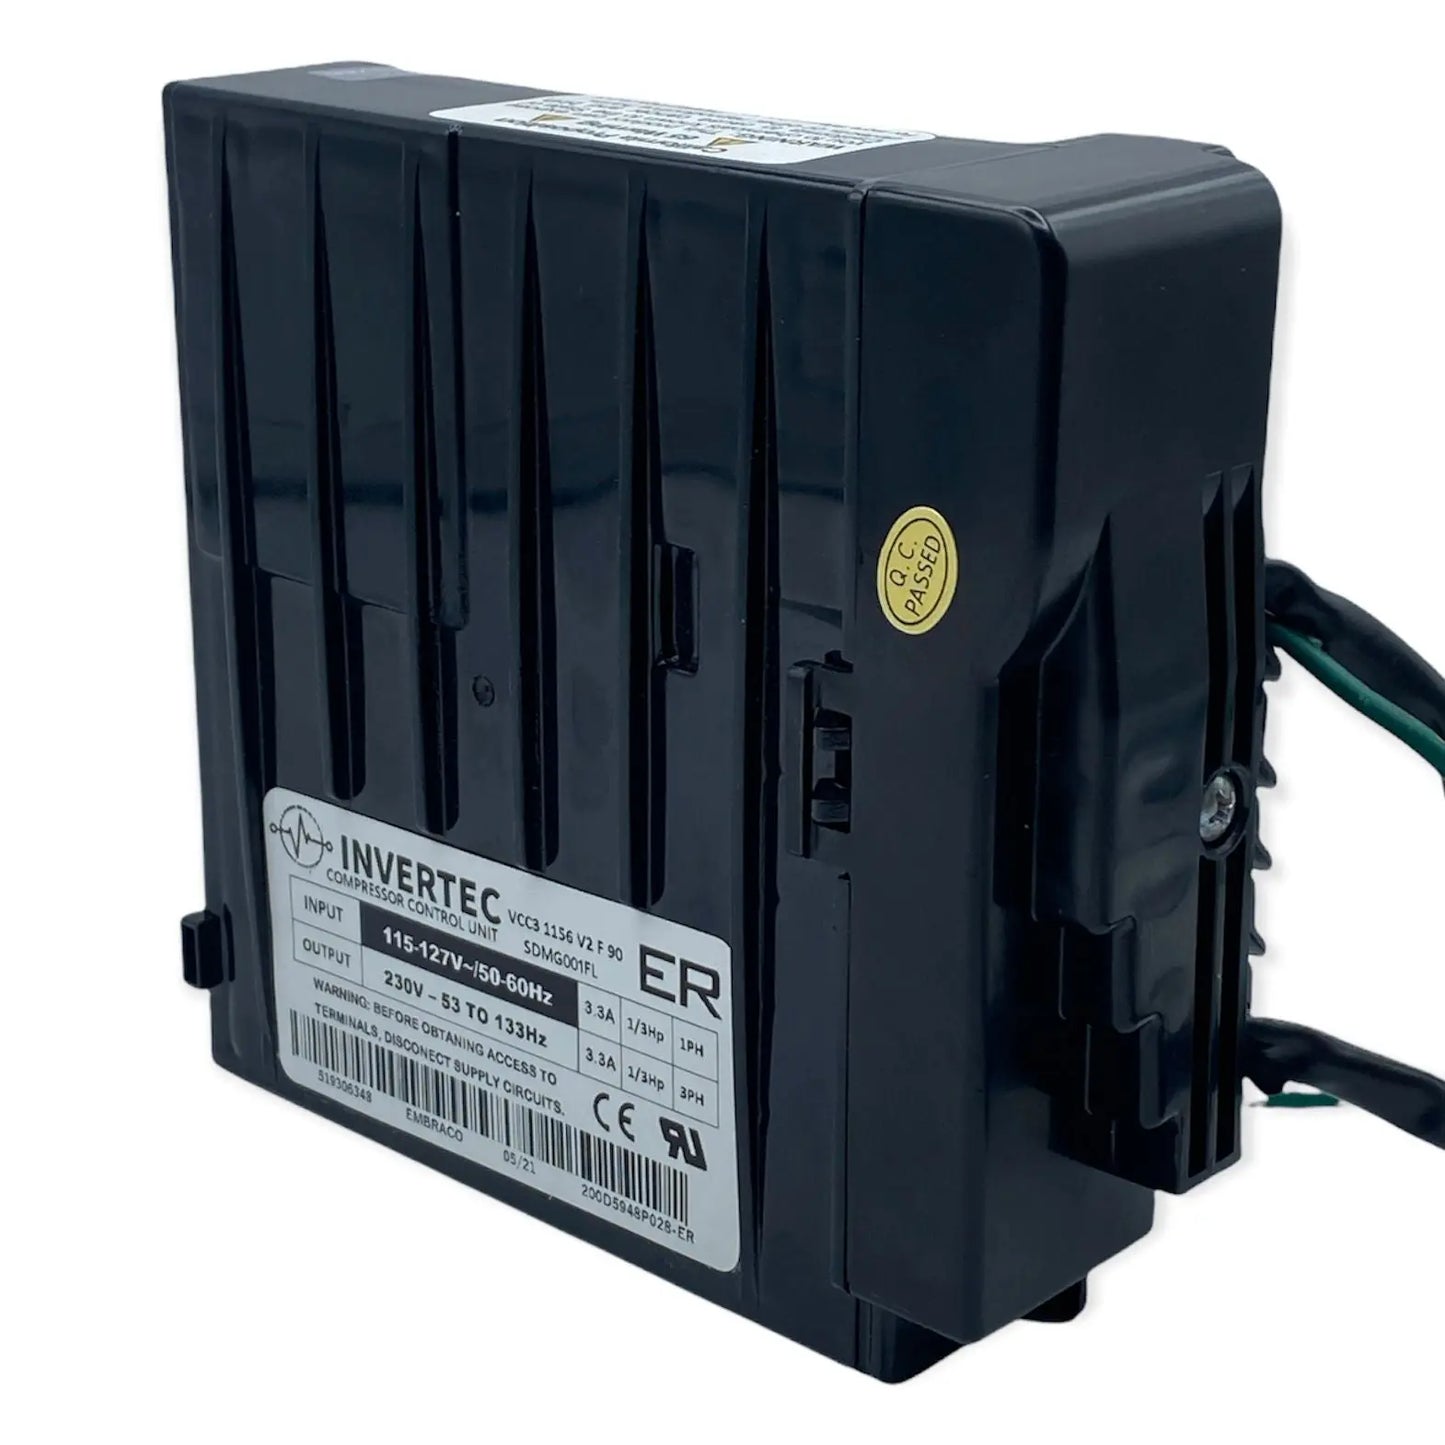 G.E /Haier Refrigerator Inverter Board Kit - 200D5948P028-115V,  REPLACES: 200D5948P027  519306348 INVERTEC